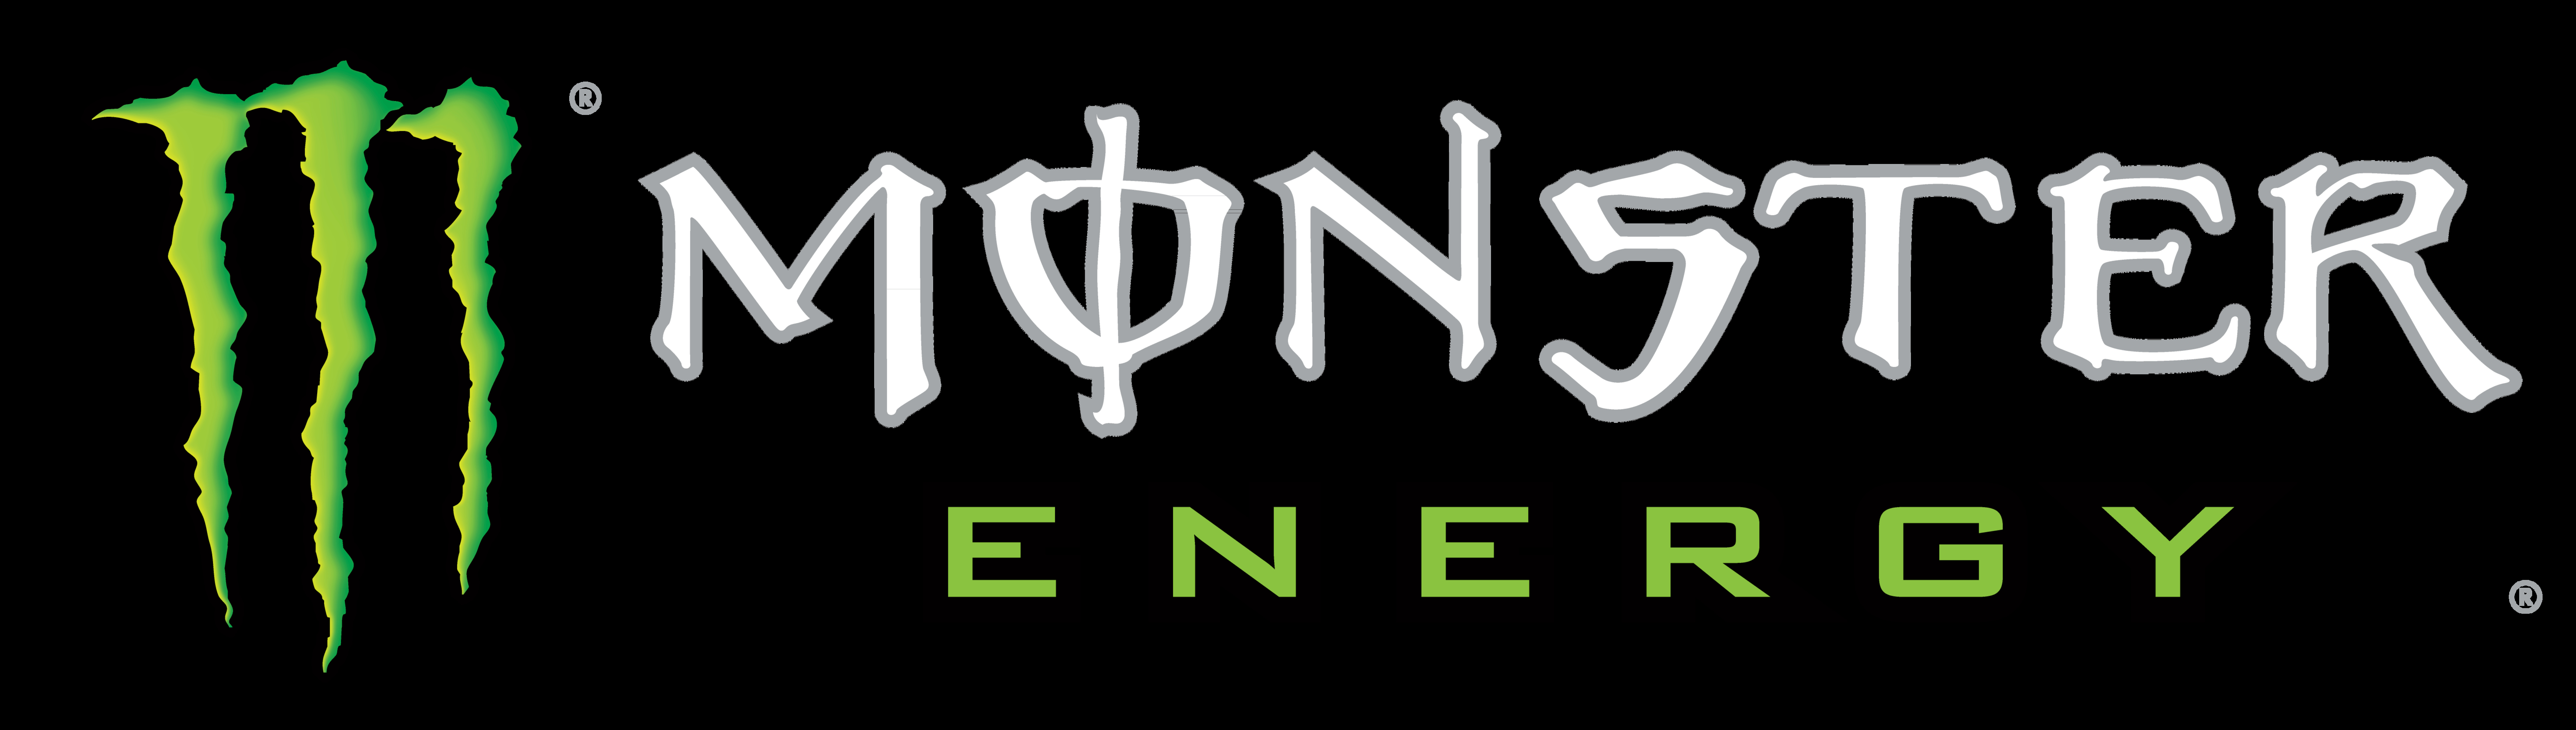 Monster Energy Logos Download